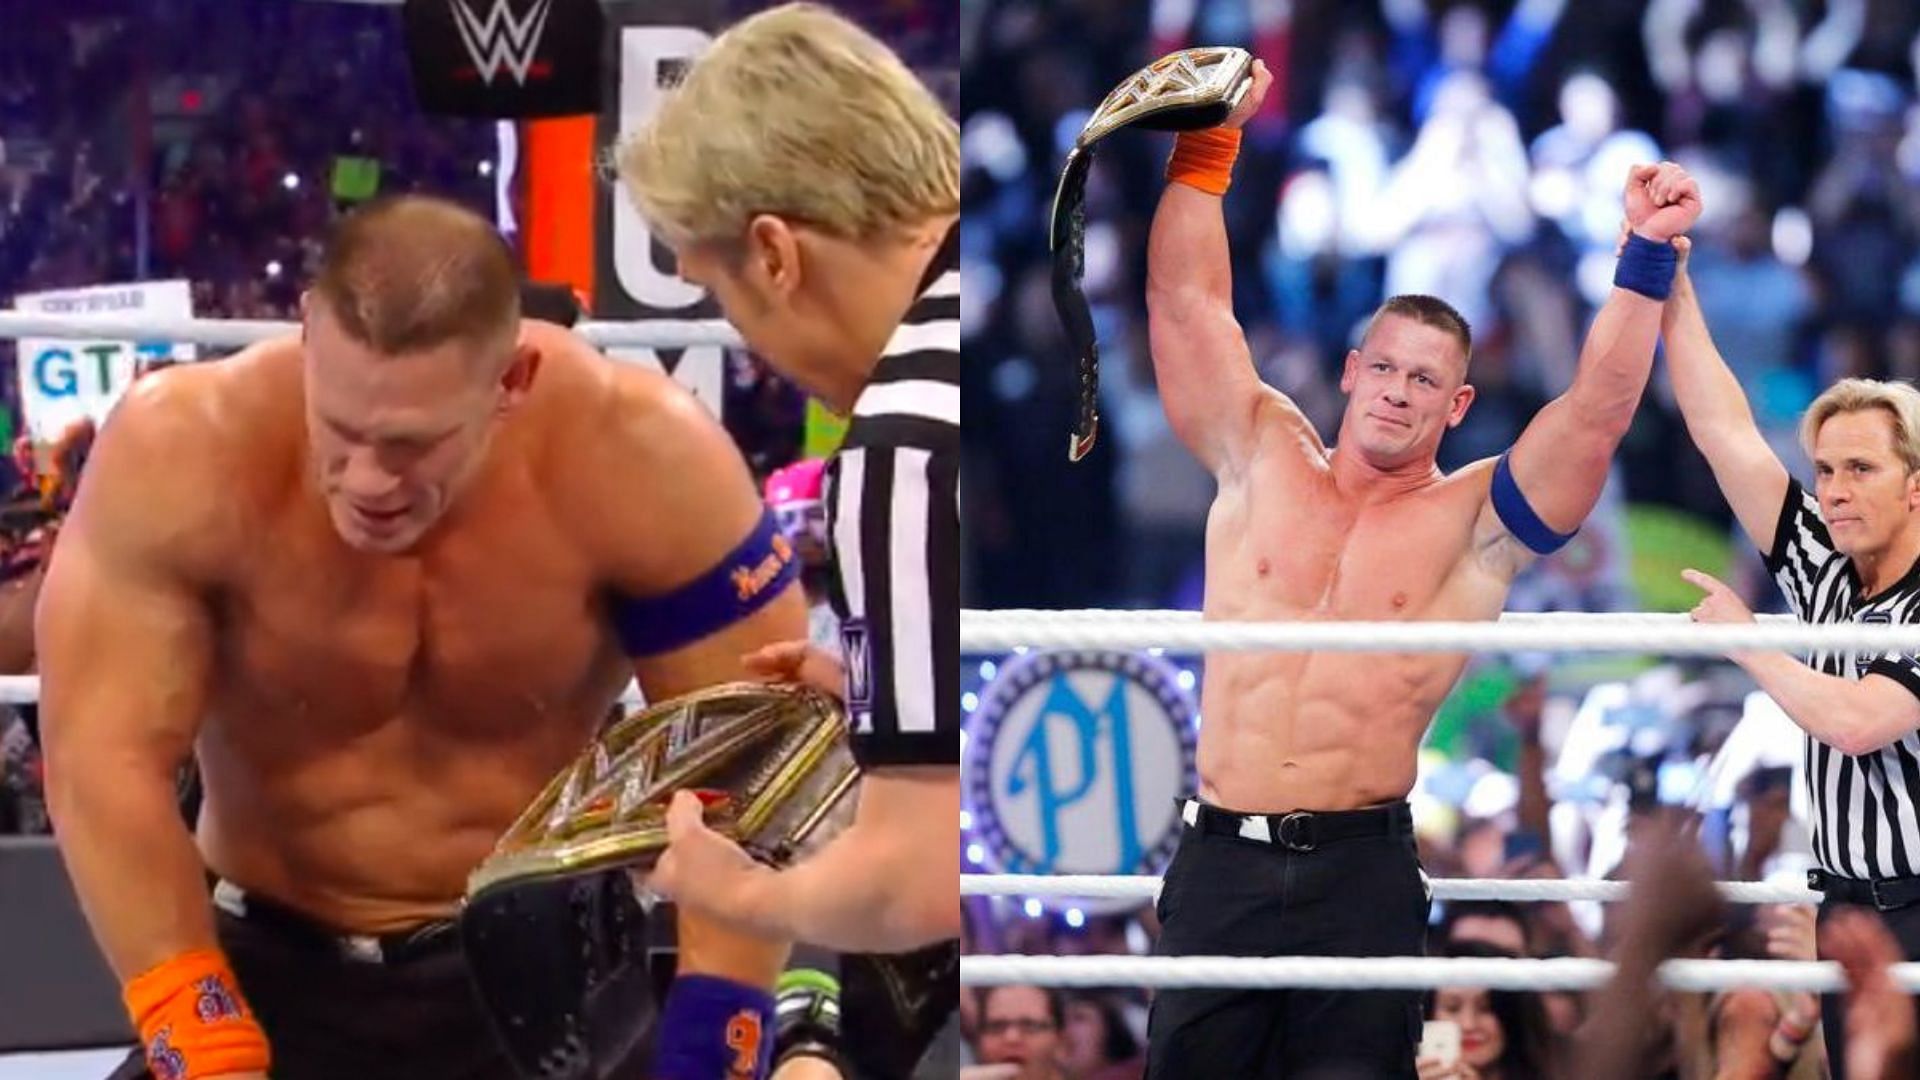 John Cena is a multi-time WWE World Champion